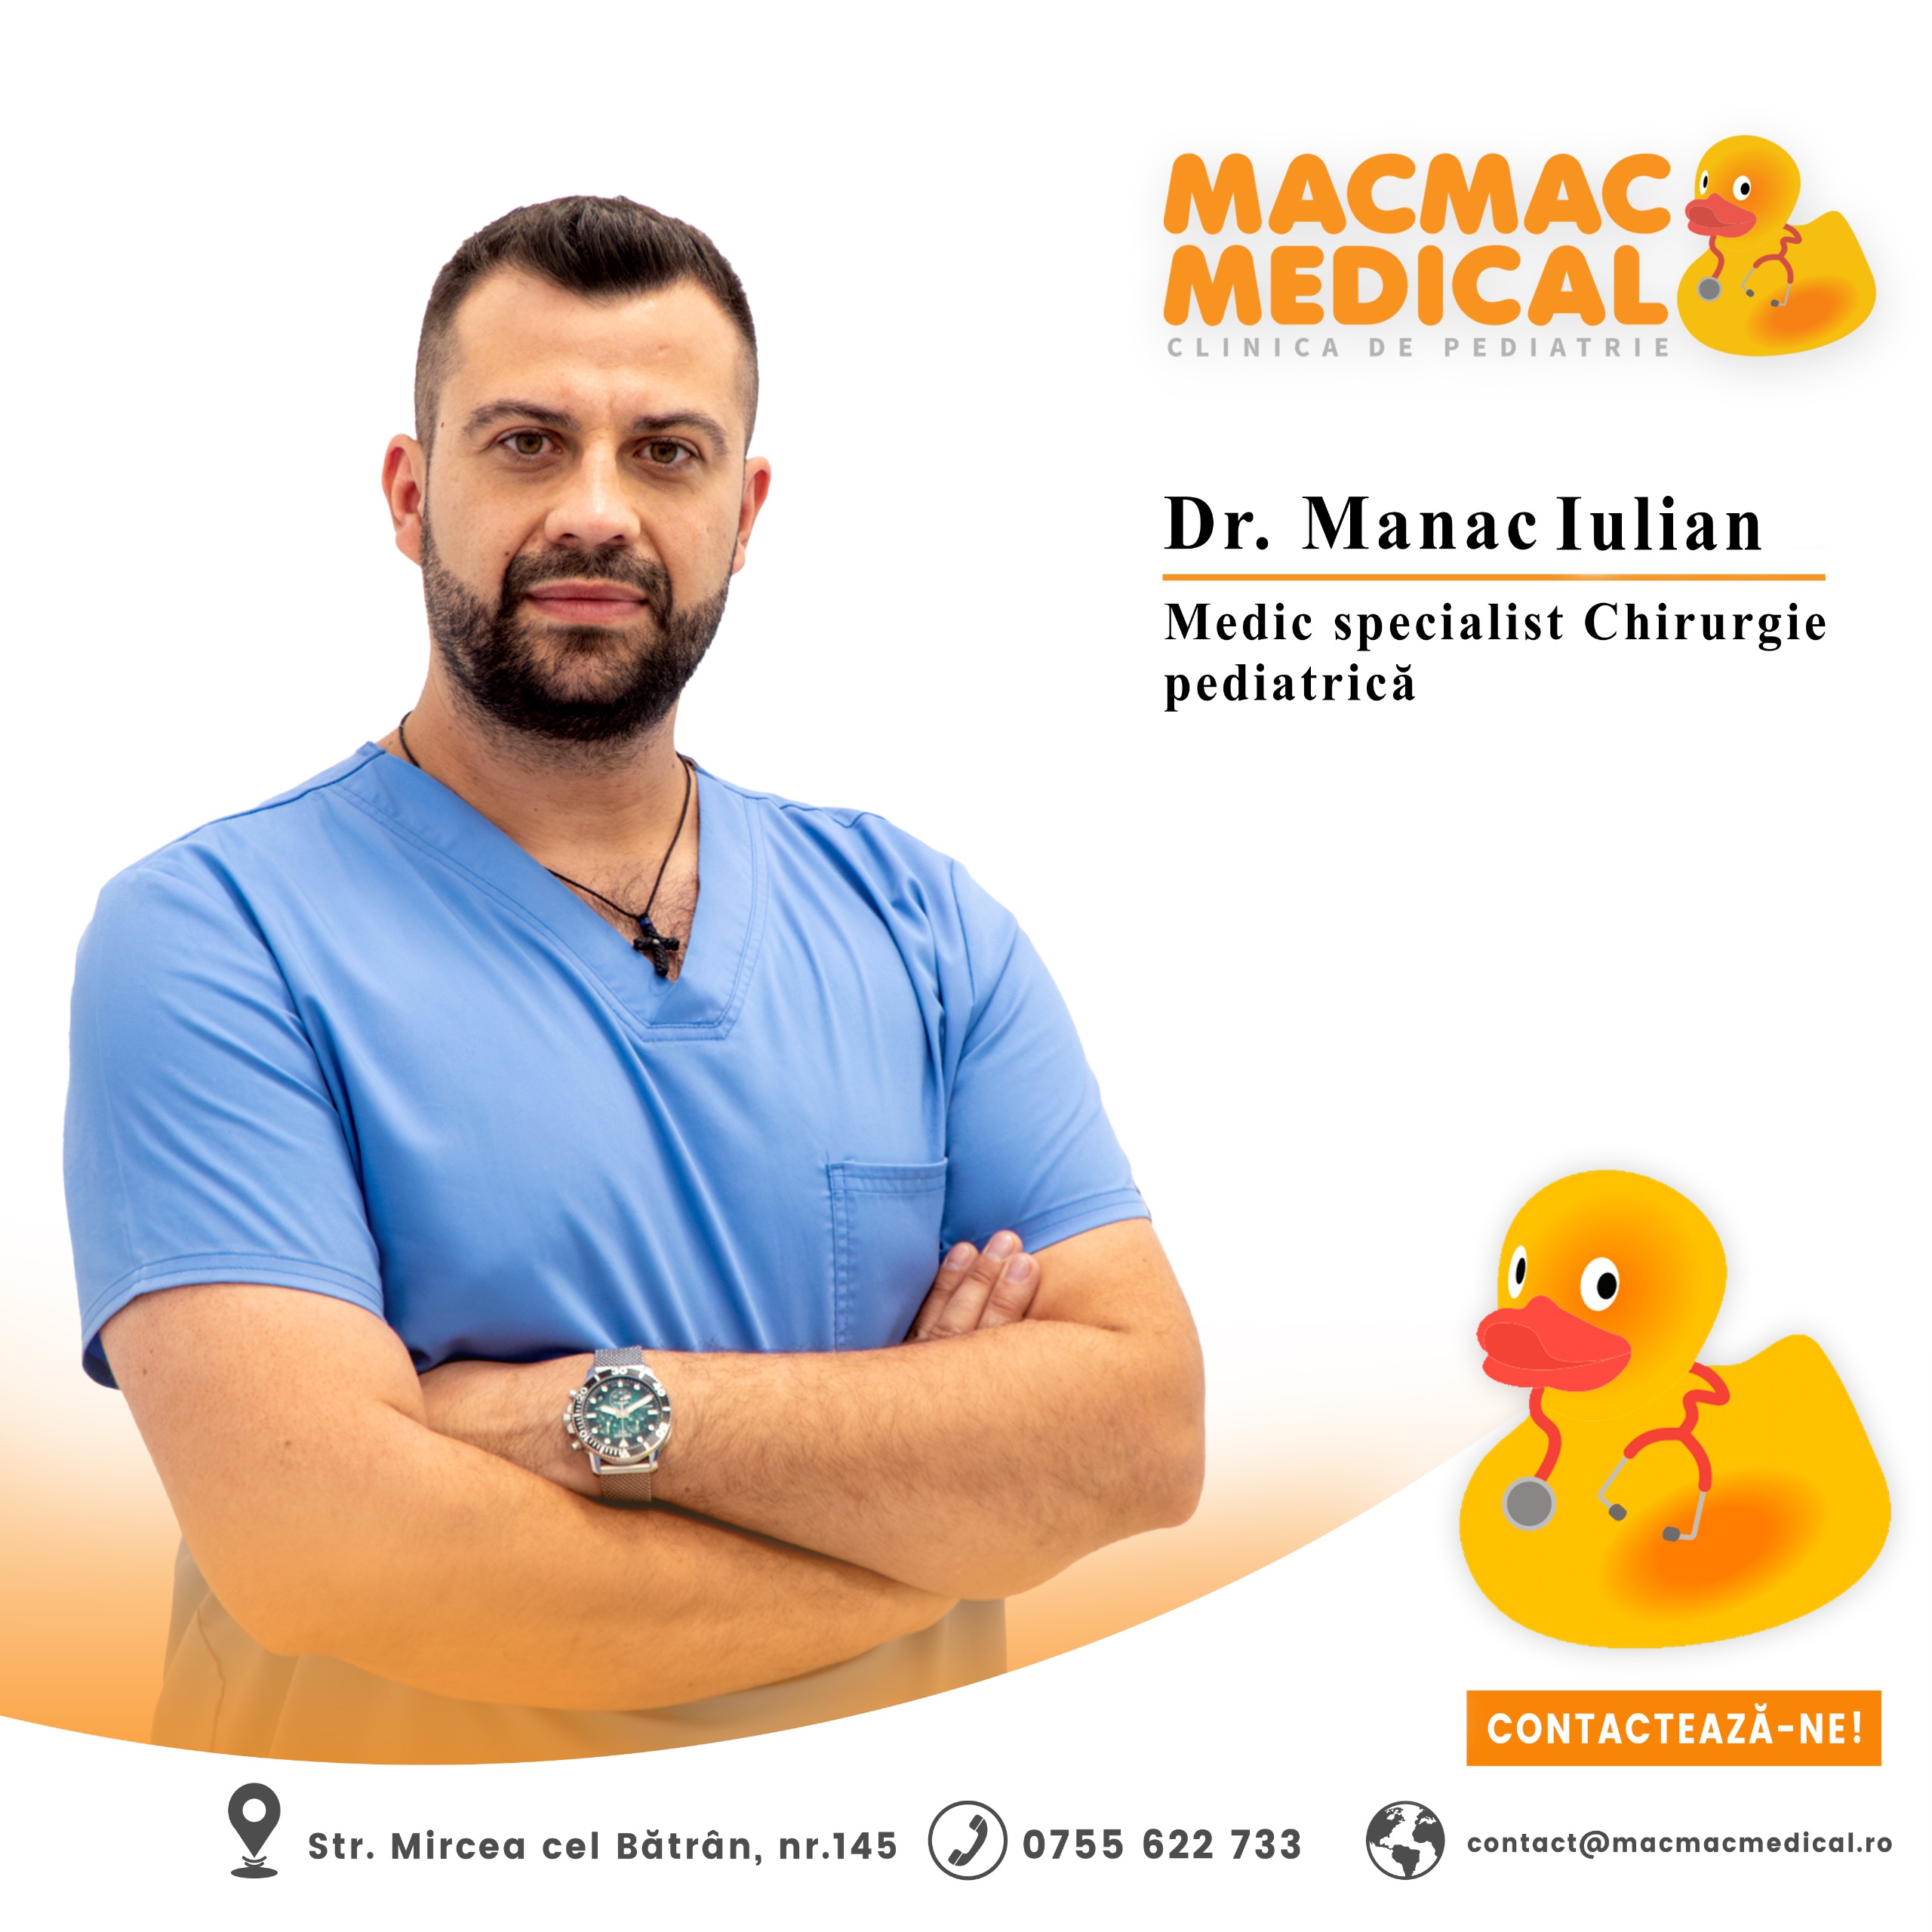 dr manac iulian medic specialist chirurgie pediatrica constanta macmac medical